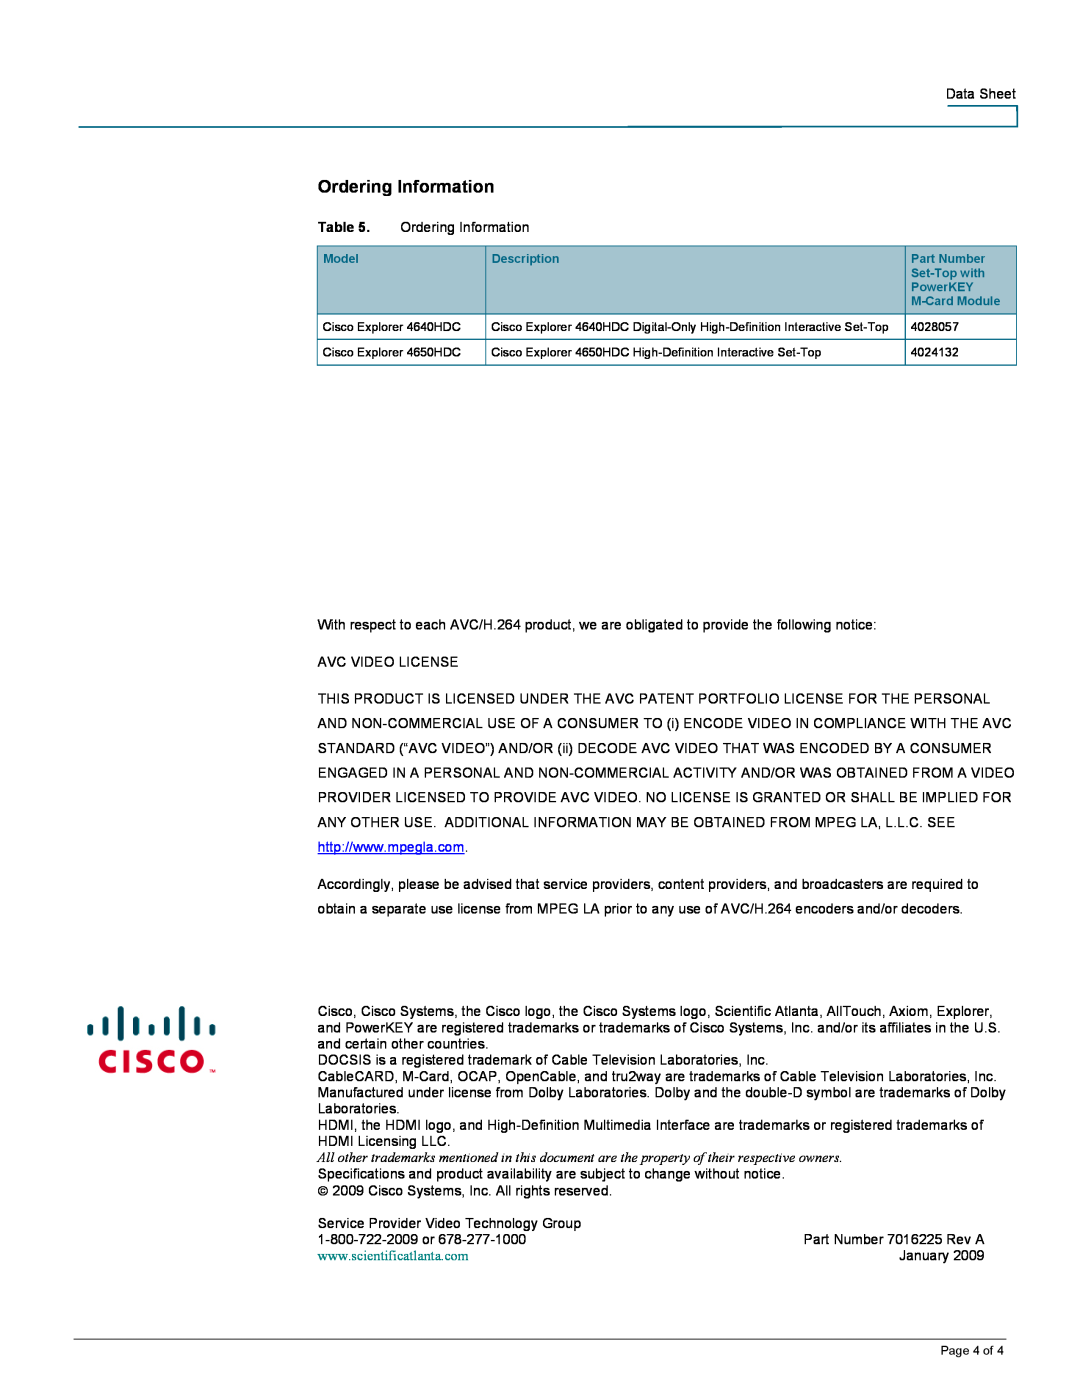 Cisco Systems manual Ordering Information, Cisco Explorer 4640HDC, 4028057, Cisco Explorer 4650HDC, 4024132, Page 4 of 